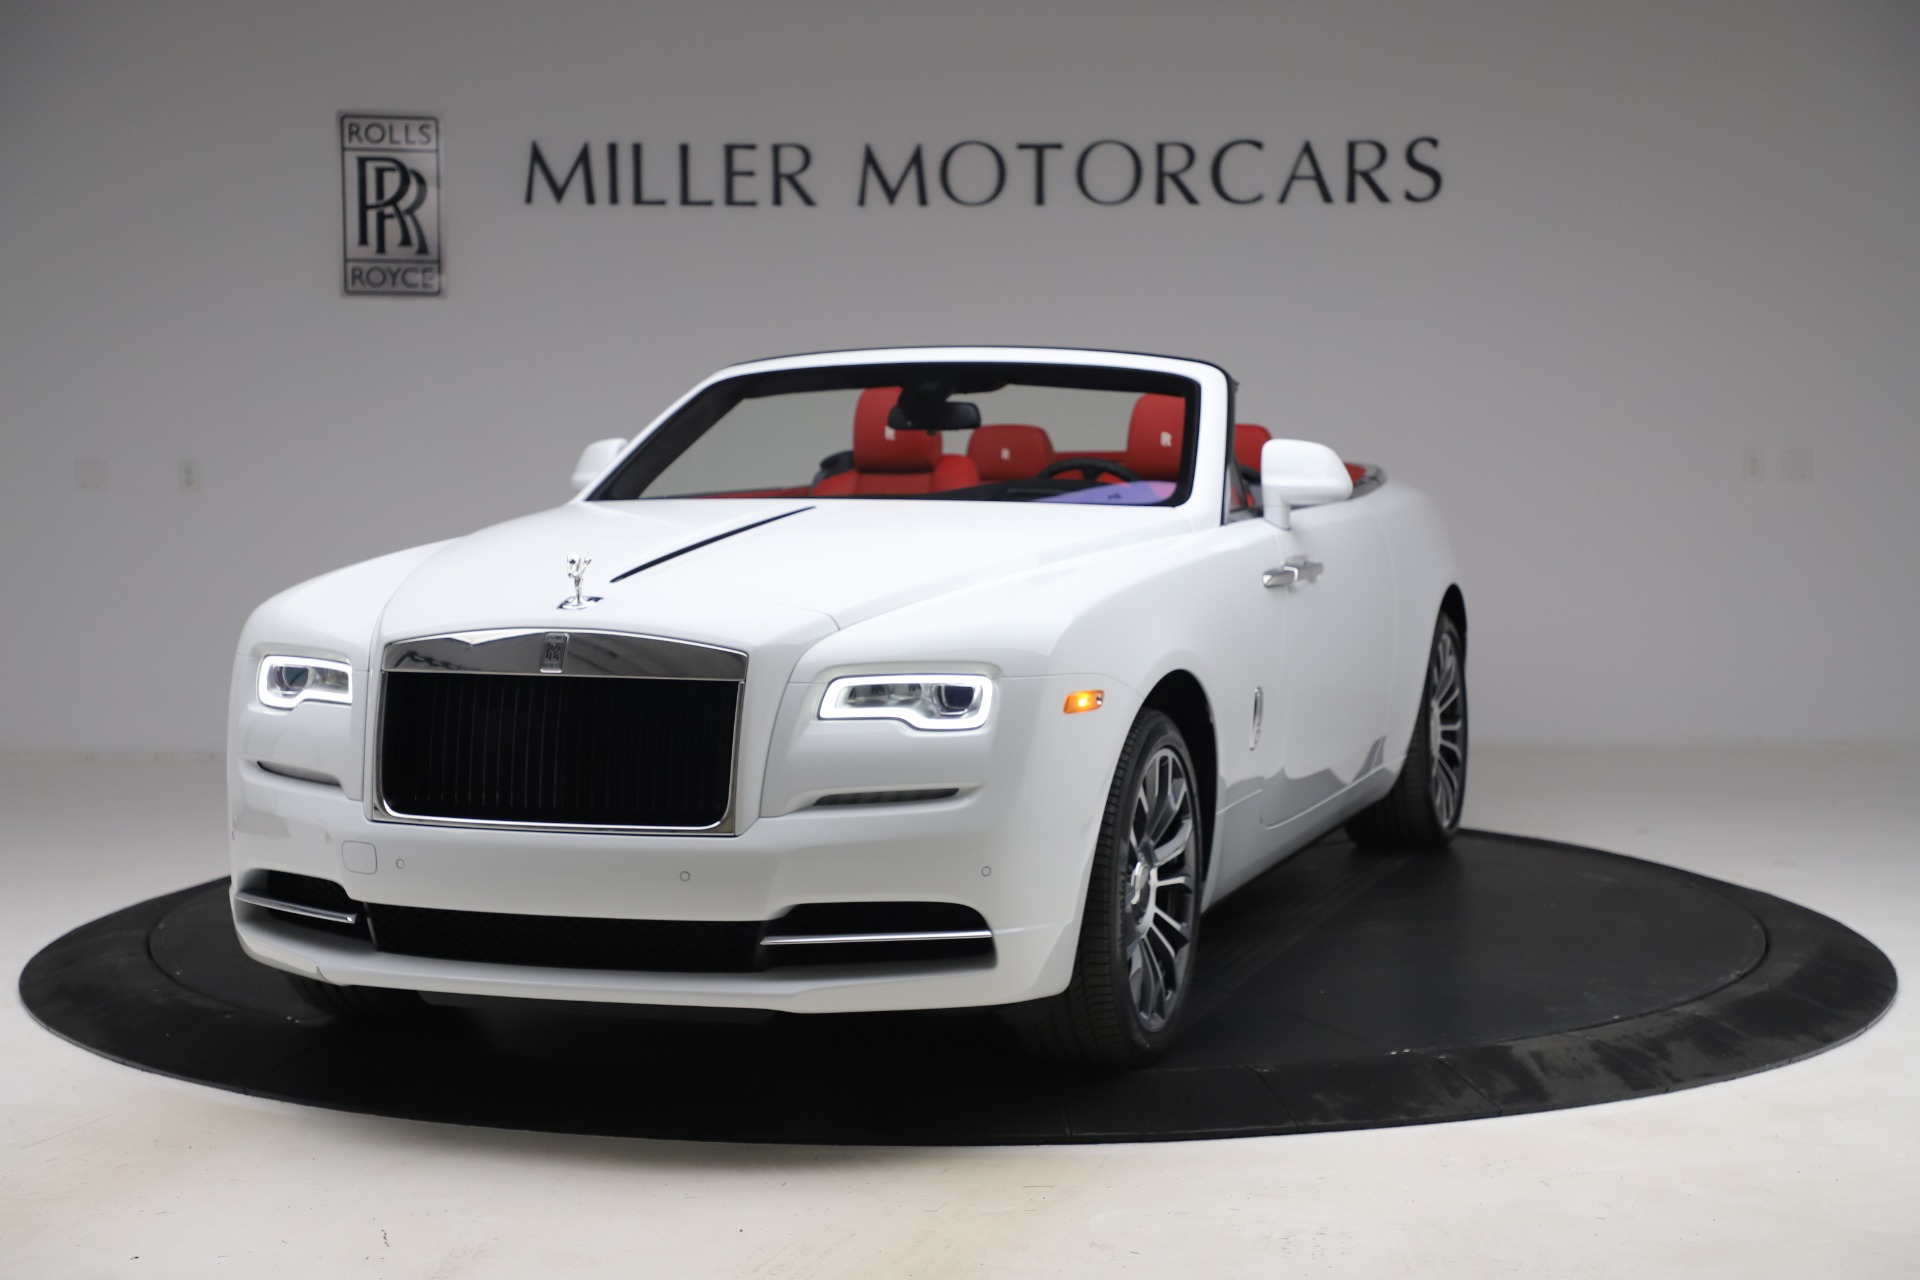 New 2020 Rolls Royce Dawn For Sale 404 675 Miller Motorcars